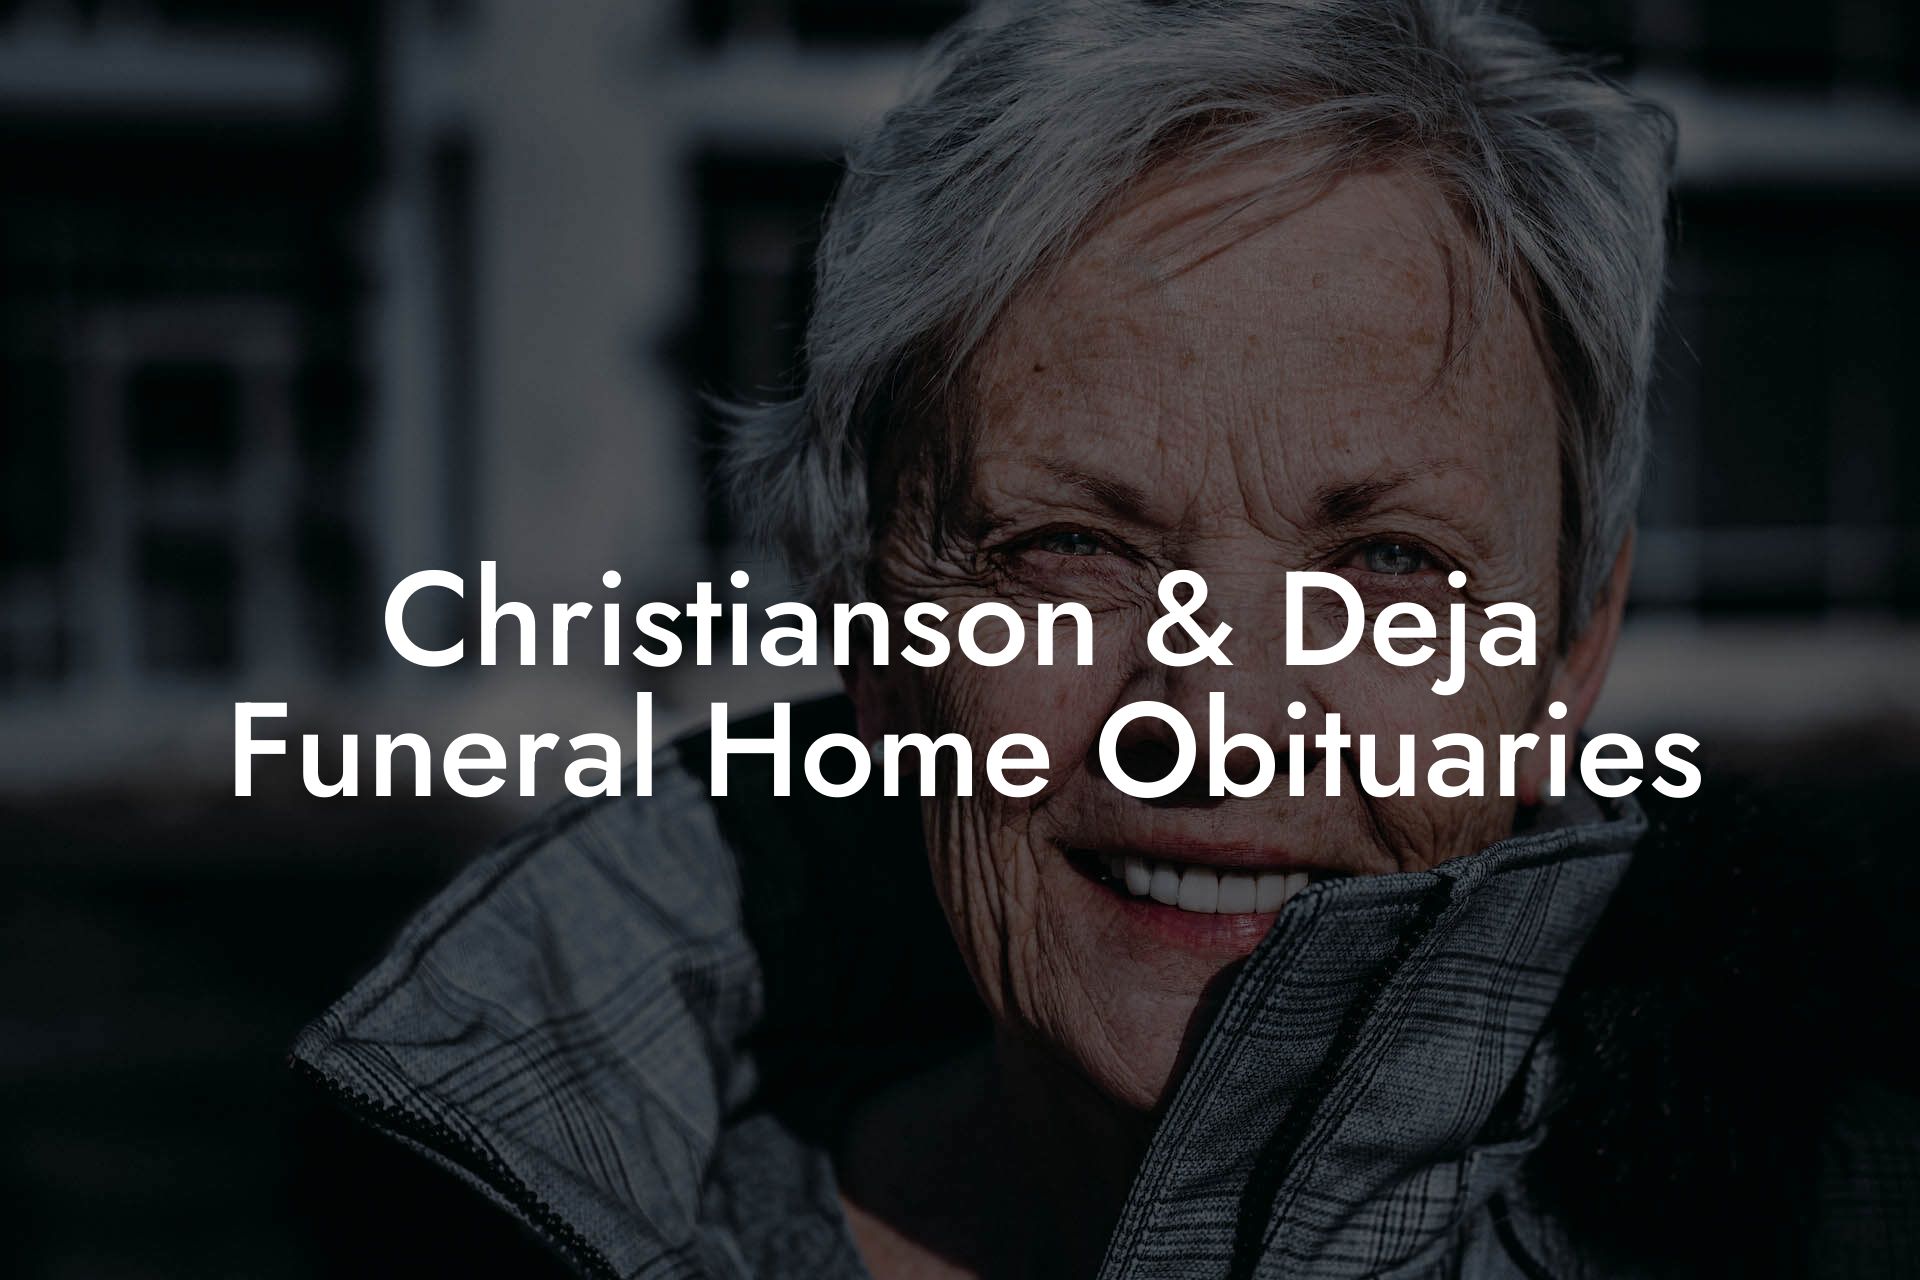 Christianson & Deja Funeral Home Obituaries